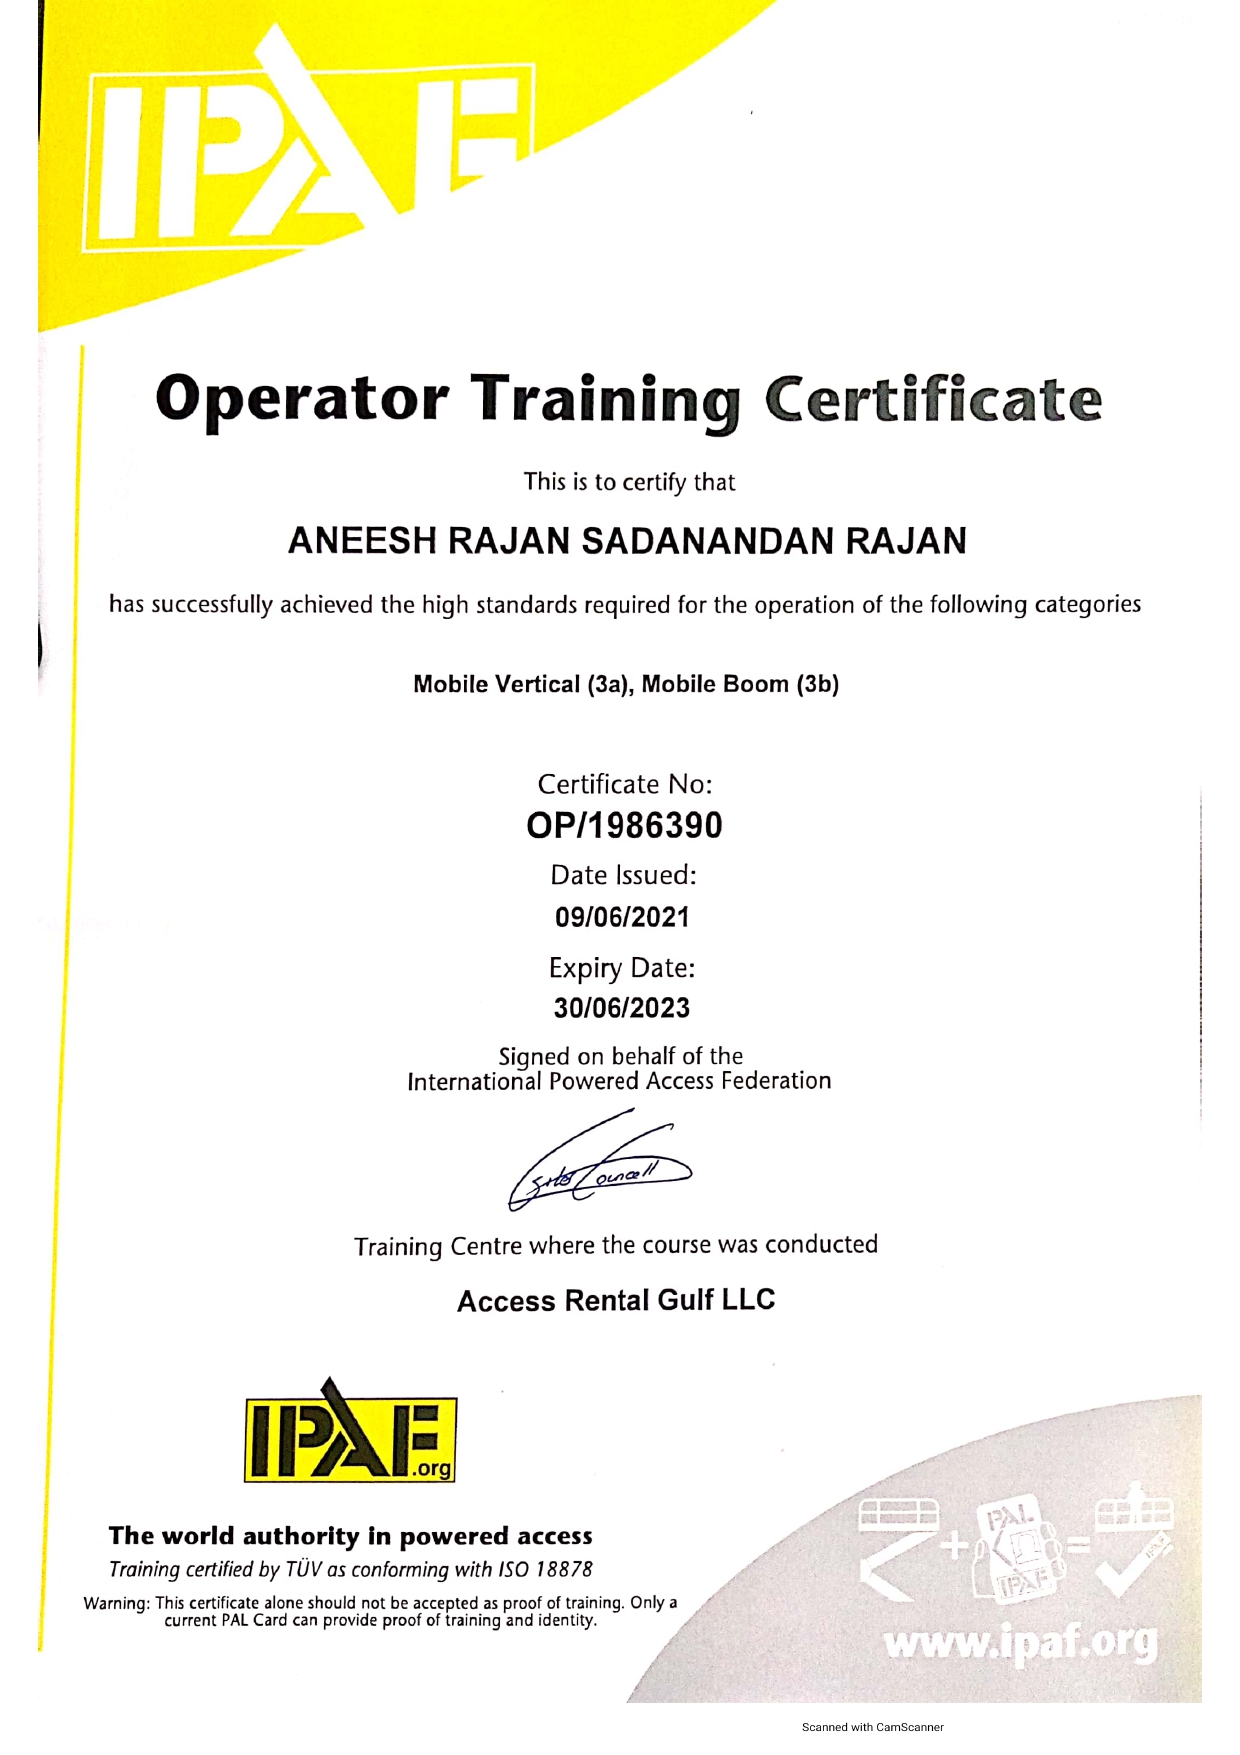 ipaf_training_certificate-5